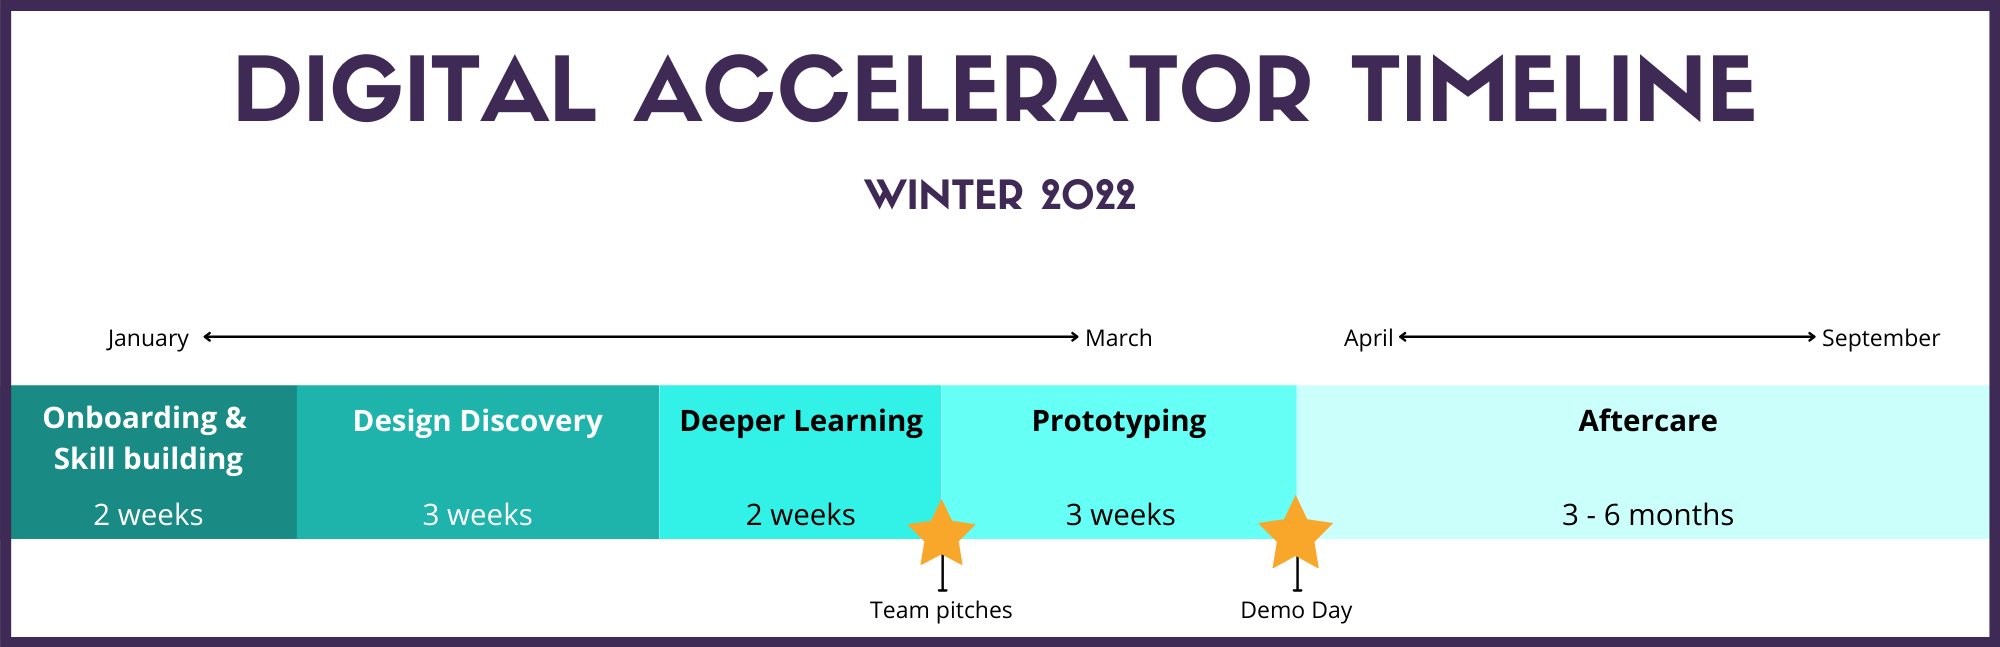 Digital accelerator overview of winter 2022 program